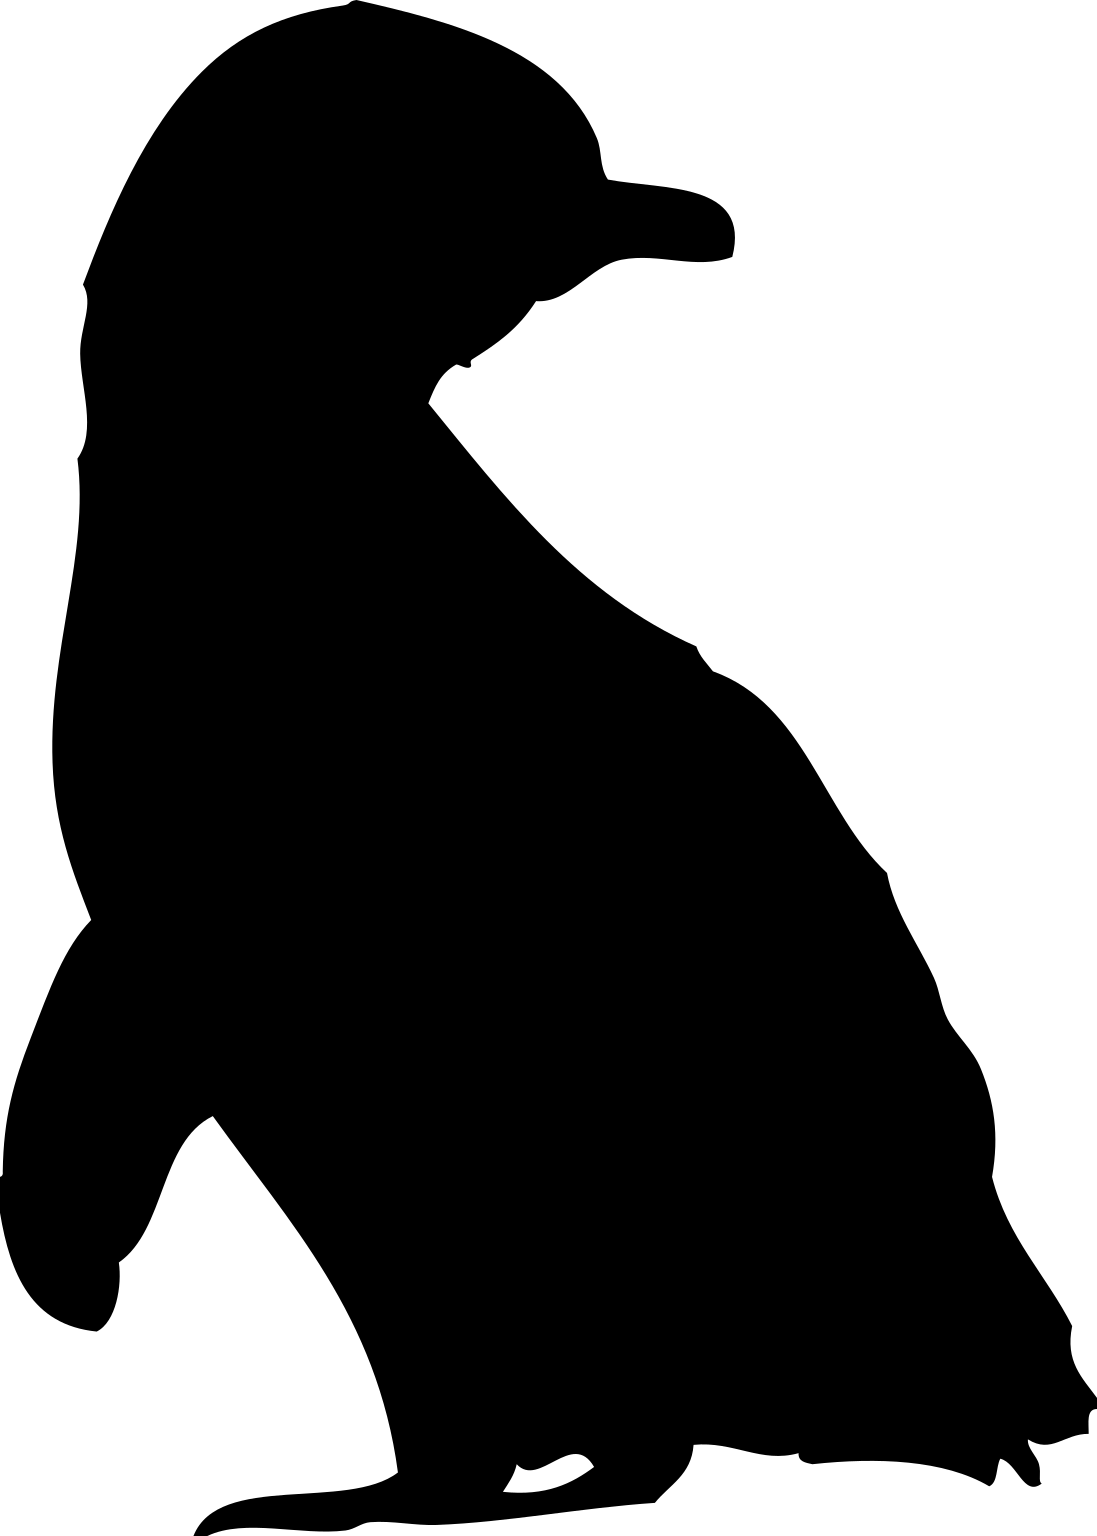 Eudyptula minor by Fir0002/Flagstaffotos (photo), John E. McCormack, Michael G. Harvey, Brant C. Faircloth, Nicholas G. Crawford, Travis C. Glenn, Robb T. Brumfield & T. Michael Keesey (CC BY 3.0)